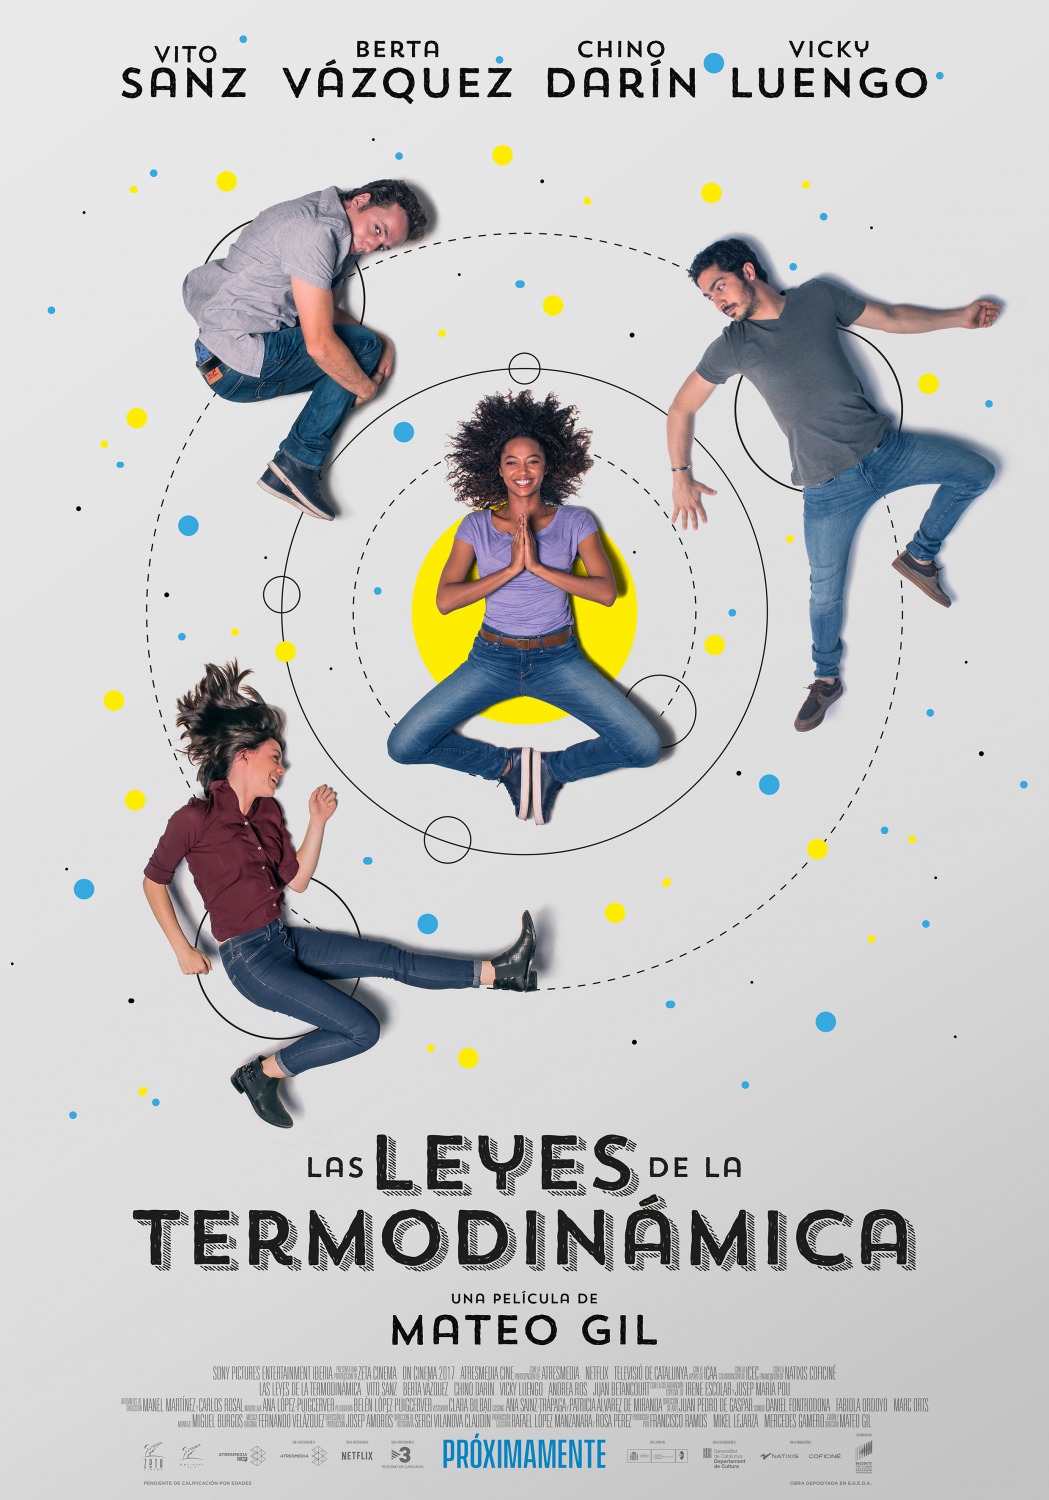 Extra Large Movie Poster Image for Las leyes de la termodinámica (#2 of 6)